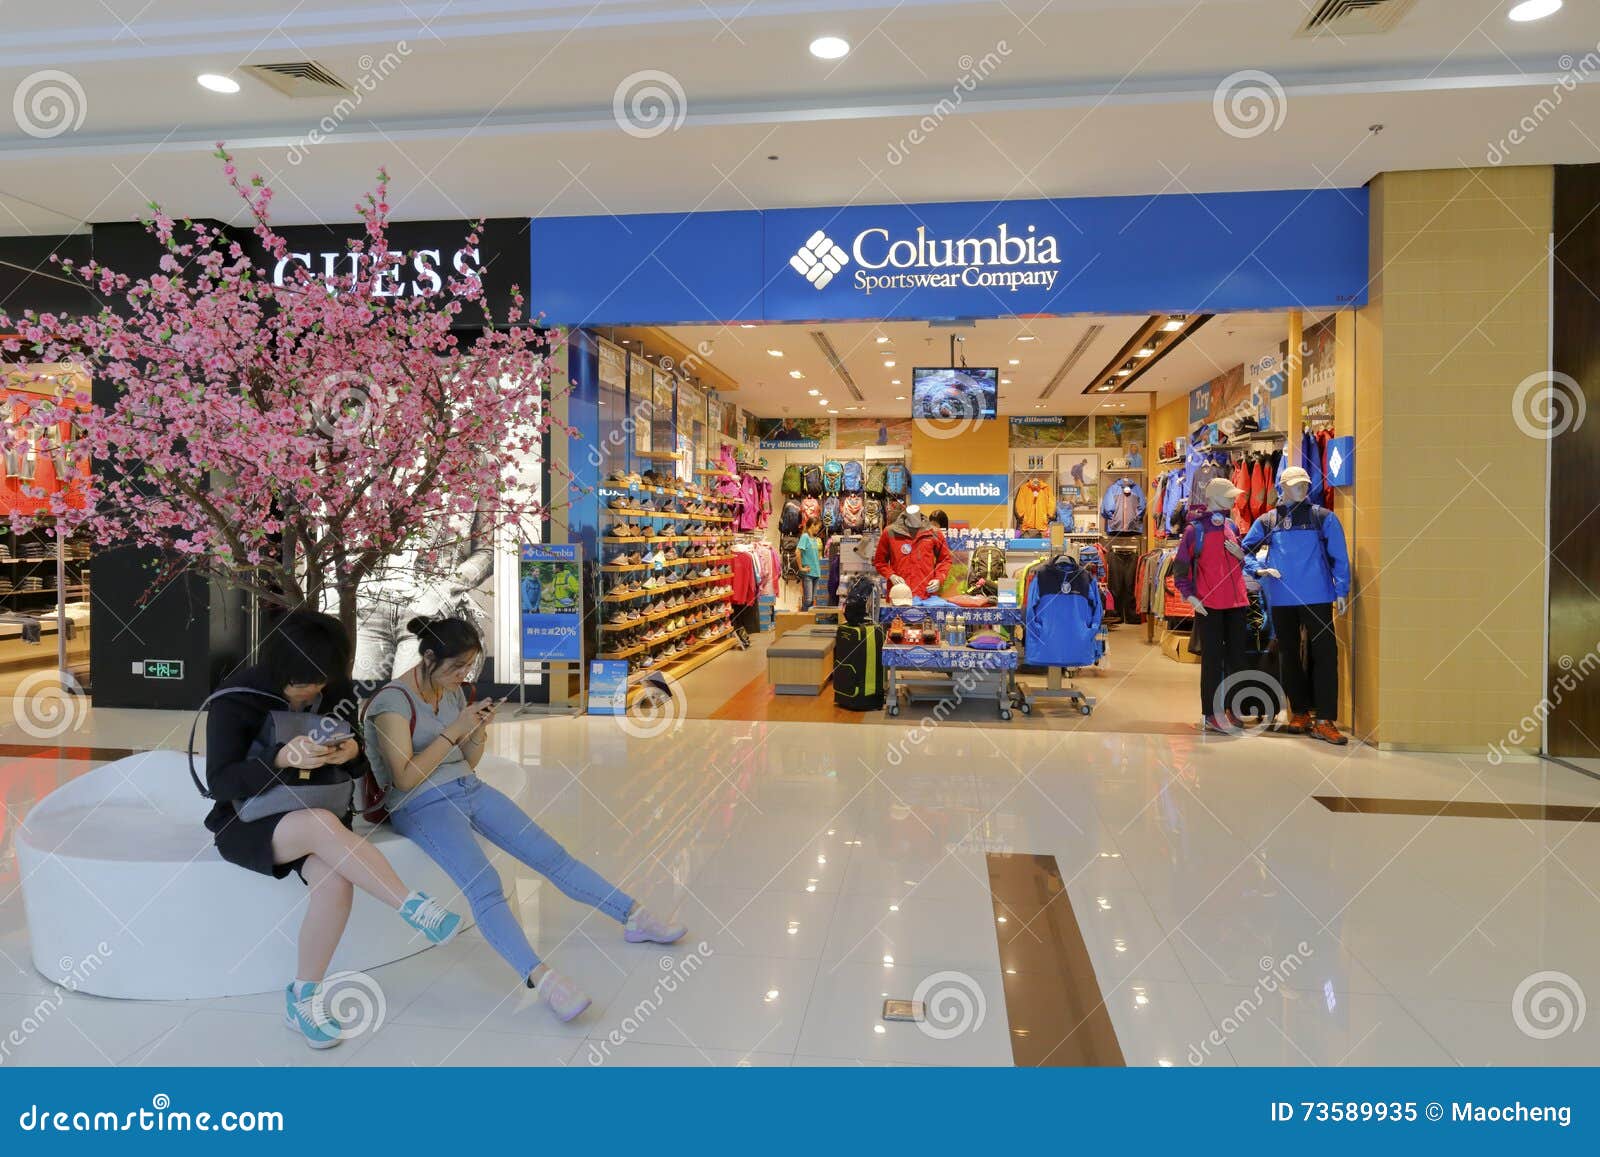 https://thumbs.dreamstime.com/z/famous-columbia-clothing-shop-facade-xiamen-city-china-73589935.jpg